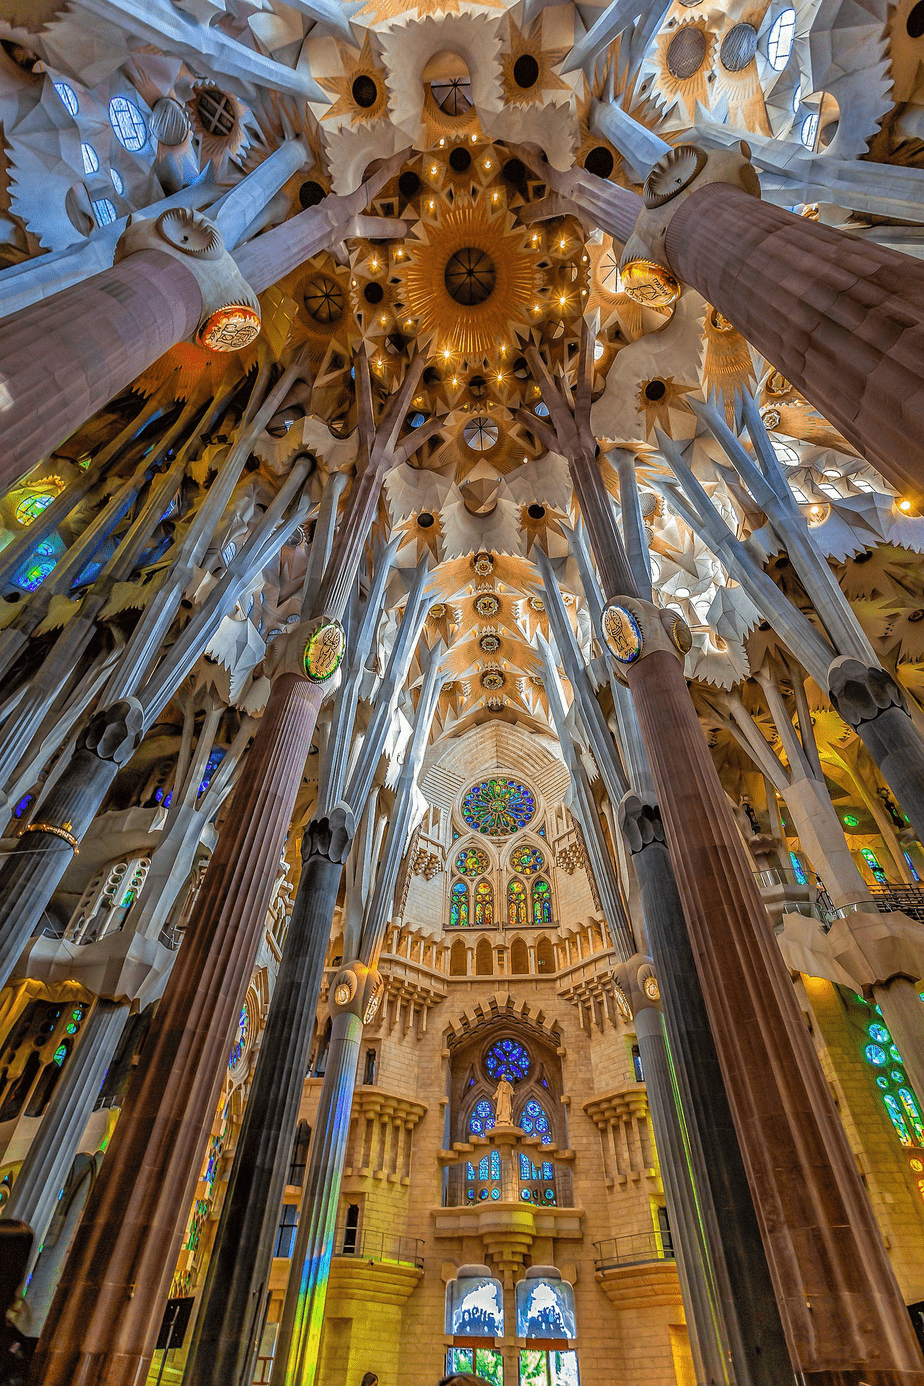 Sagrada Familia by Gaudi - Basilica in Barcelona, Spain - 137 Year Project 112